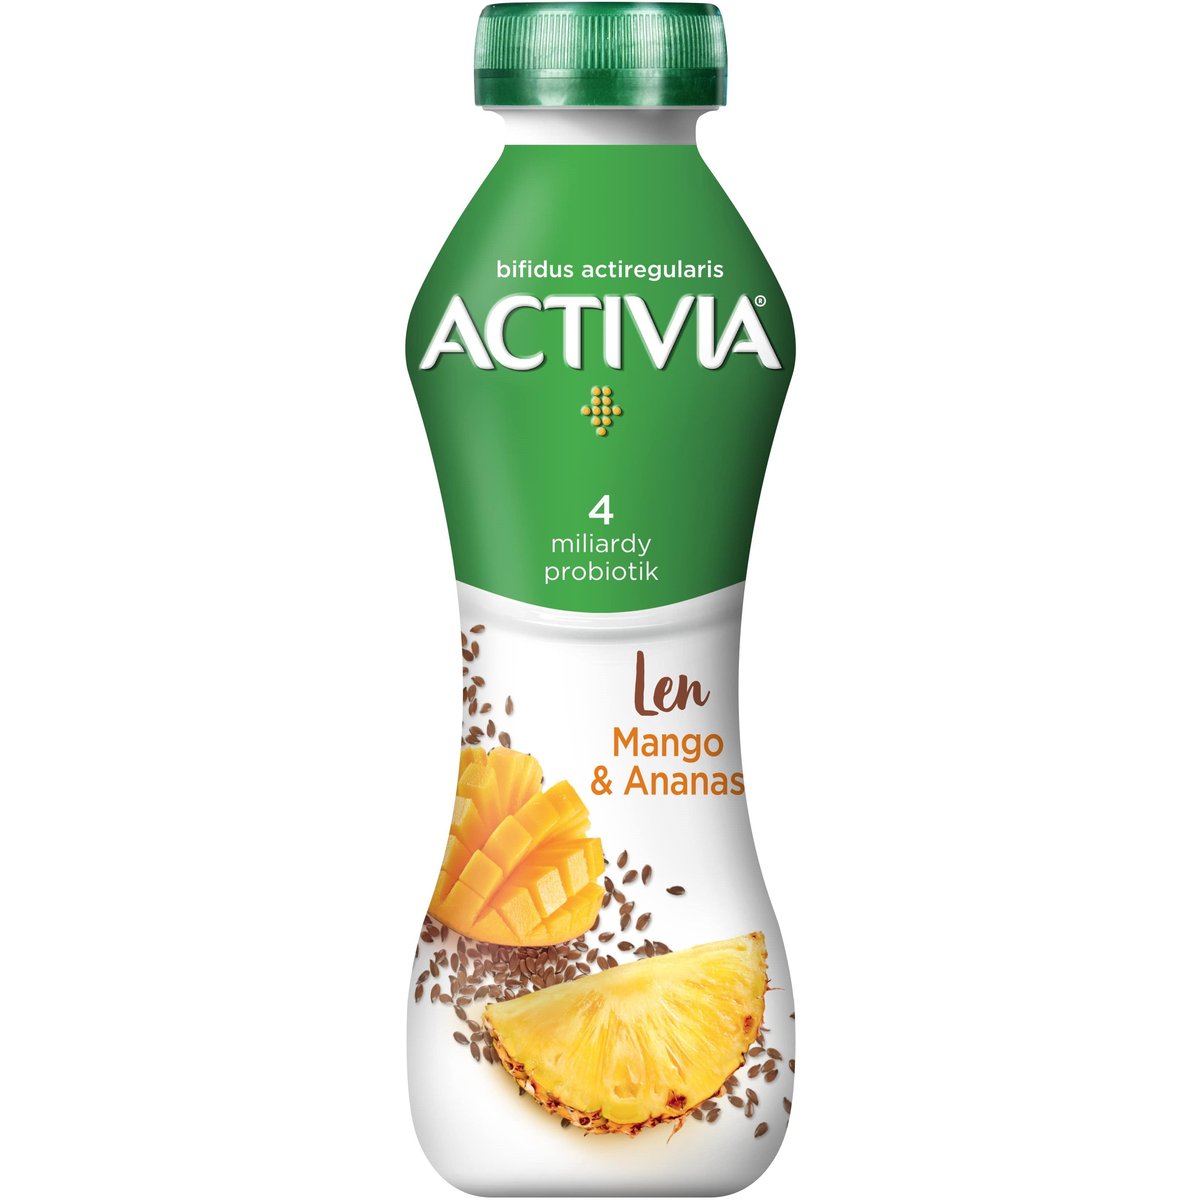 Activia Probiotický jogurtový nápoj mango, ananas a lněná semínka v akci